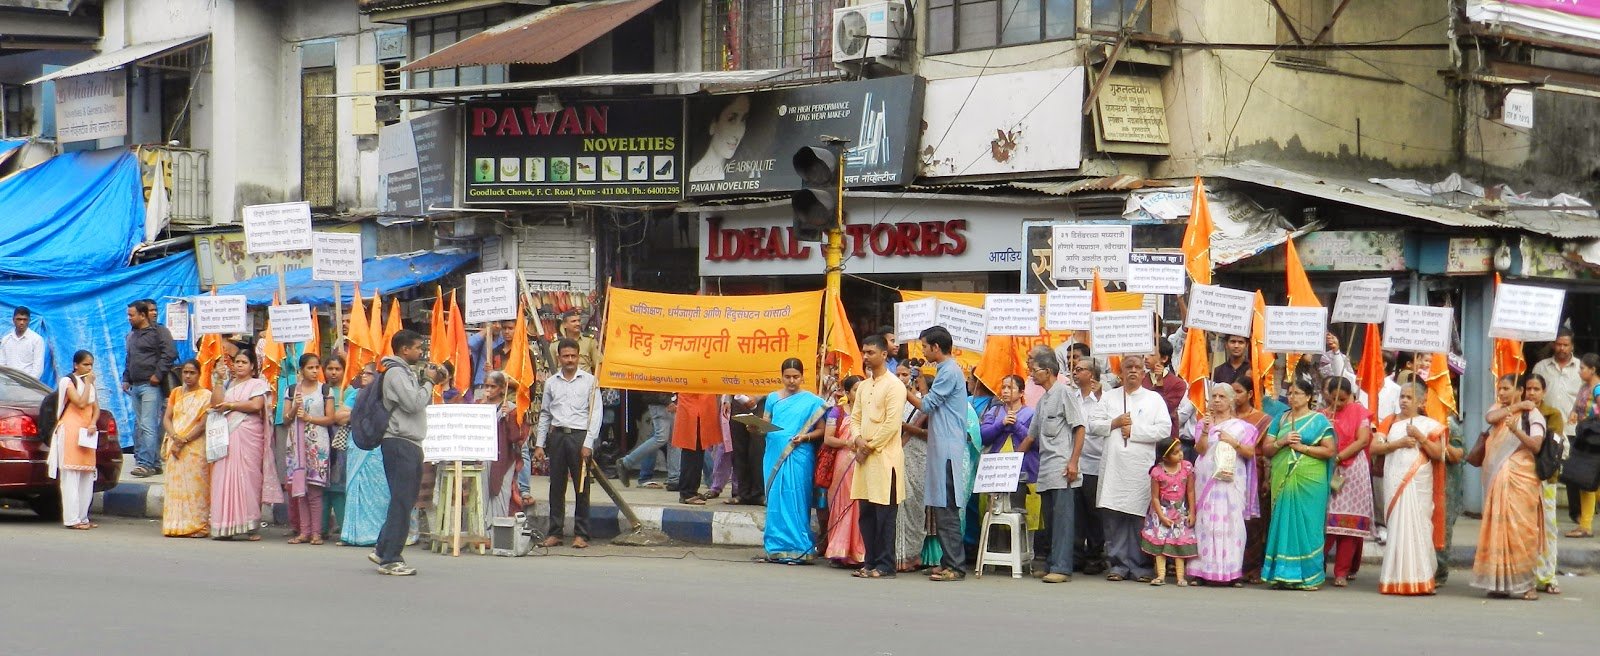 Devout Hindus participating in demonstrations at Pune under Rashtriya Hindu Andolan